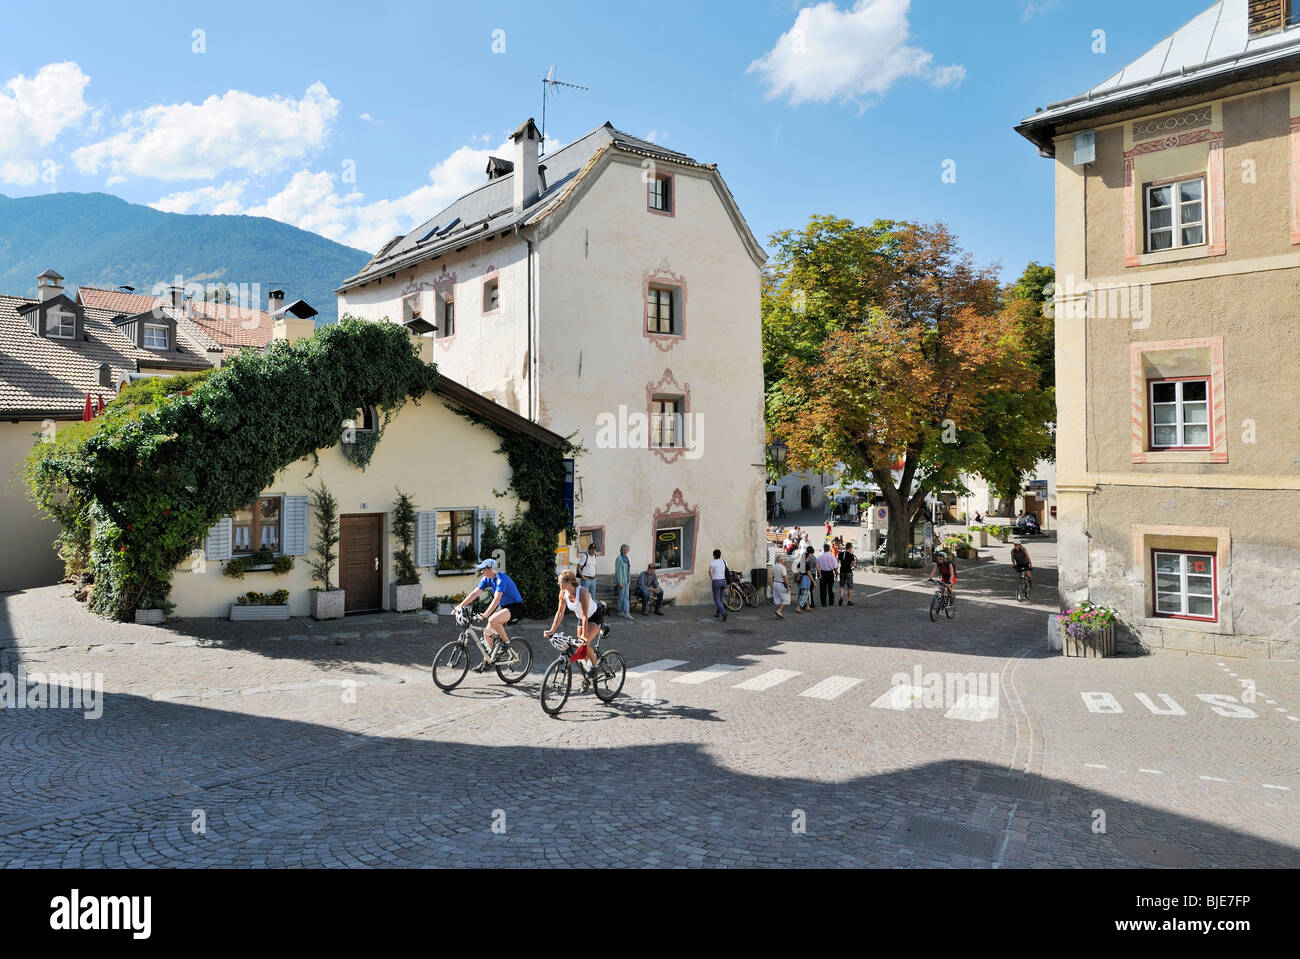 The centre of the Mediaeval walled town of Stadt Glurns, Glorenza, in the Val Venosta, Italian Alps. Alto Adige, Italy Stock Photo